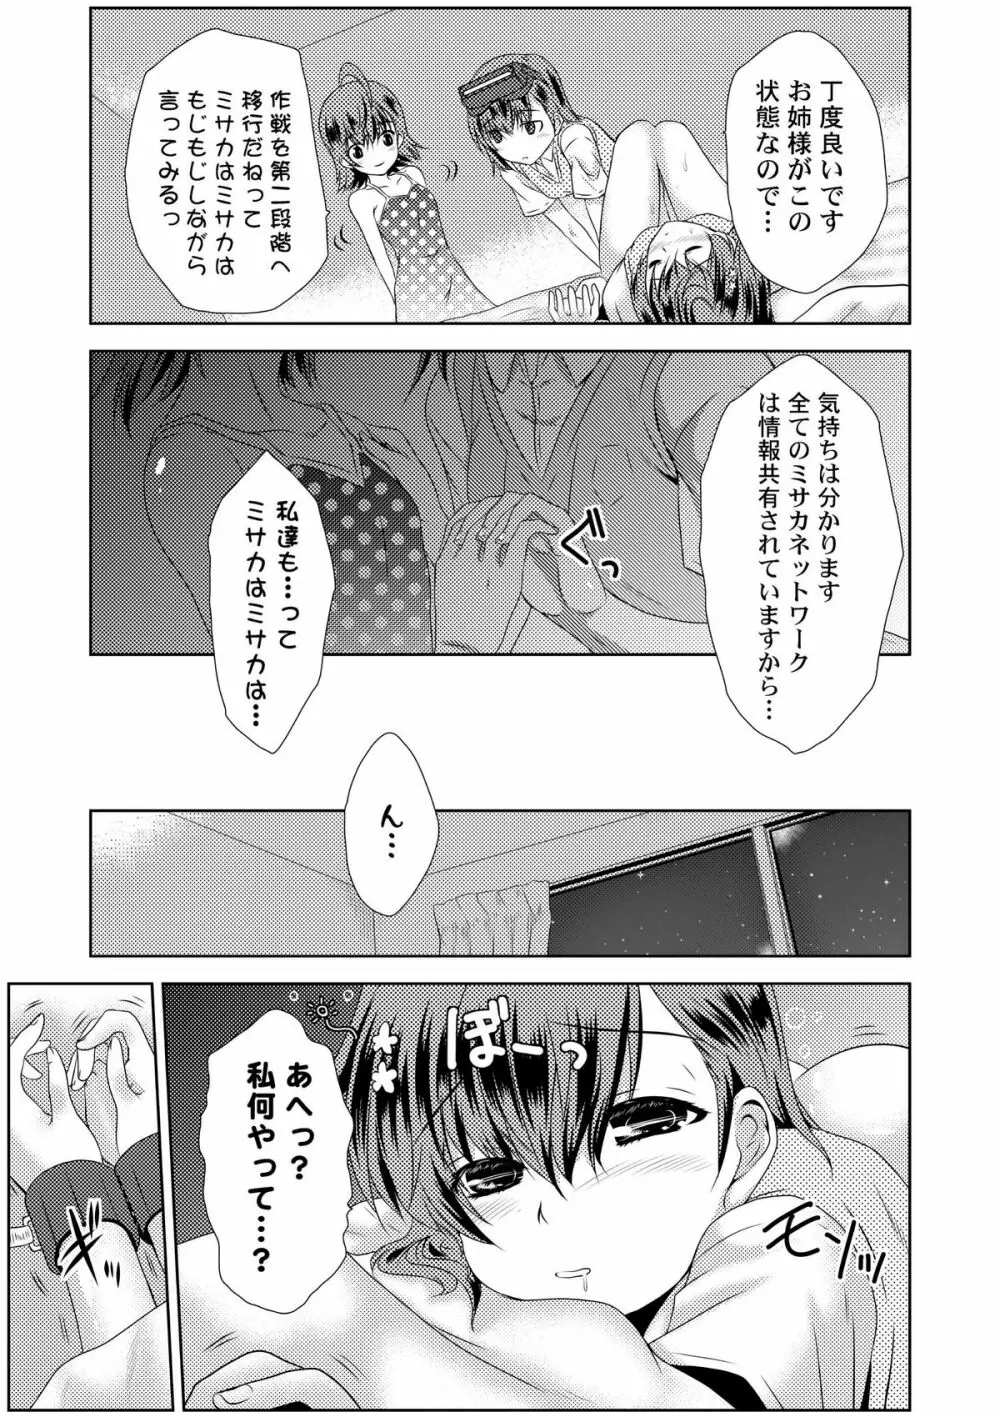 MISAKA×3 素直なキミ達へ。 15ページ